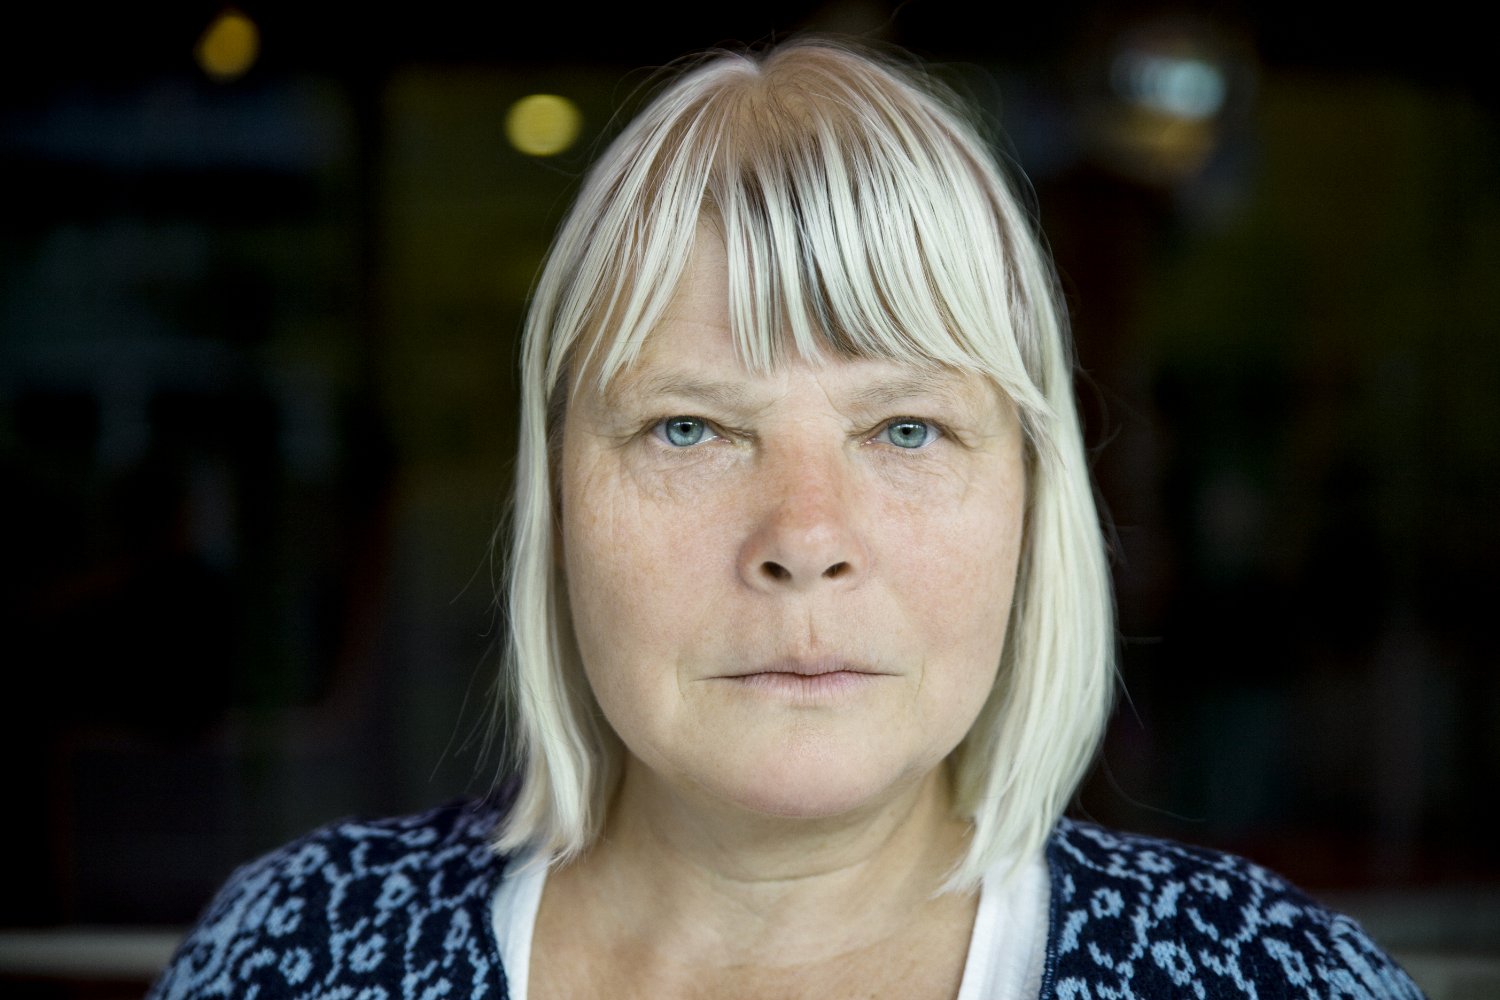 Anki Larsson